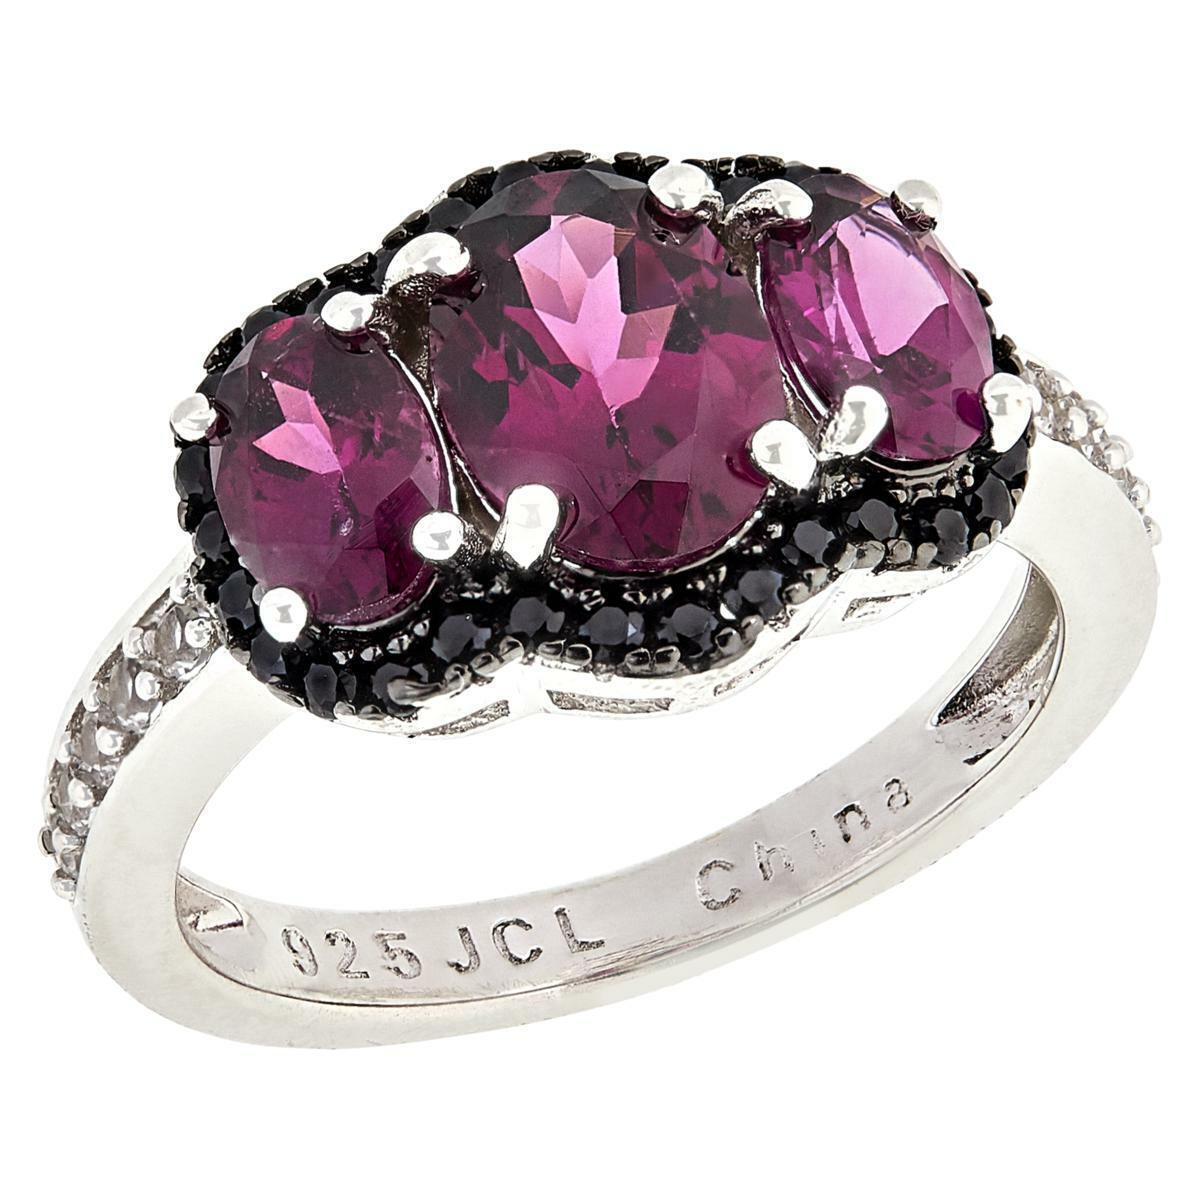 Colleen Lopez Sterling Silver Oval Purple Garnet Gemstone 3 Stone Ring, Size 8